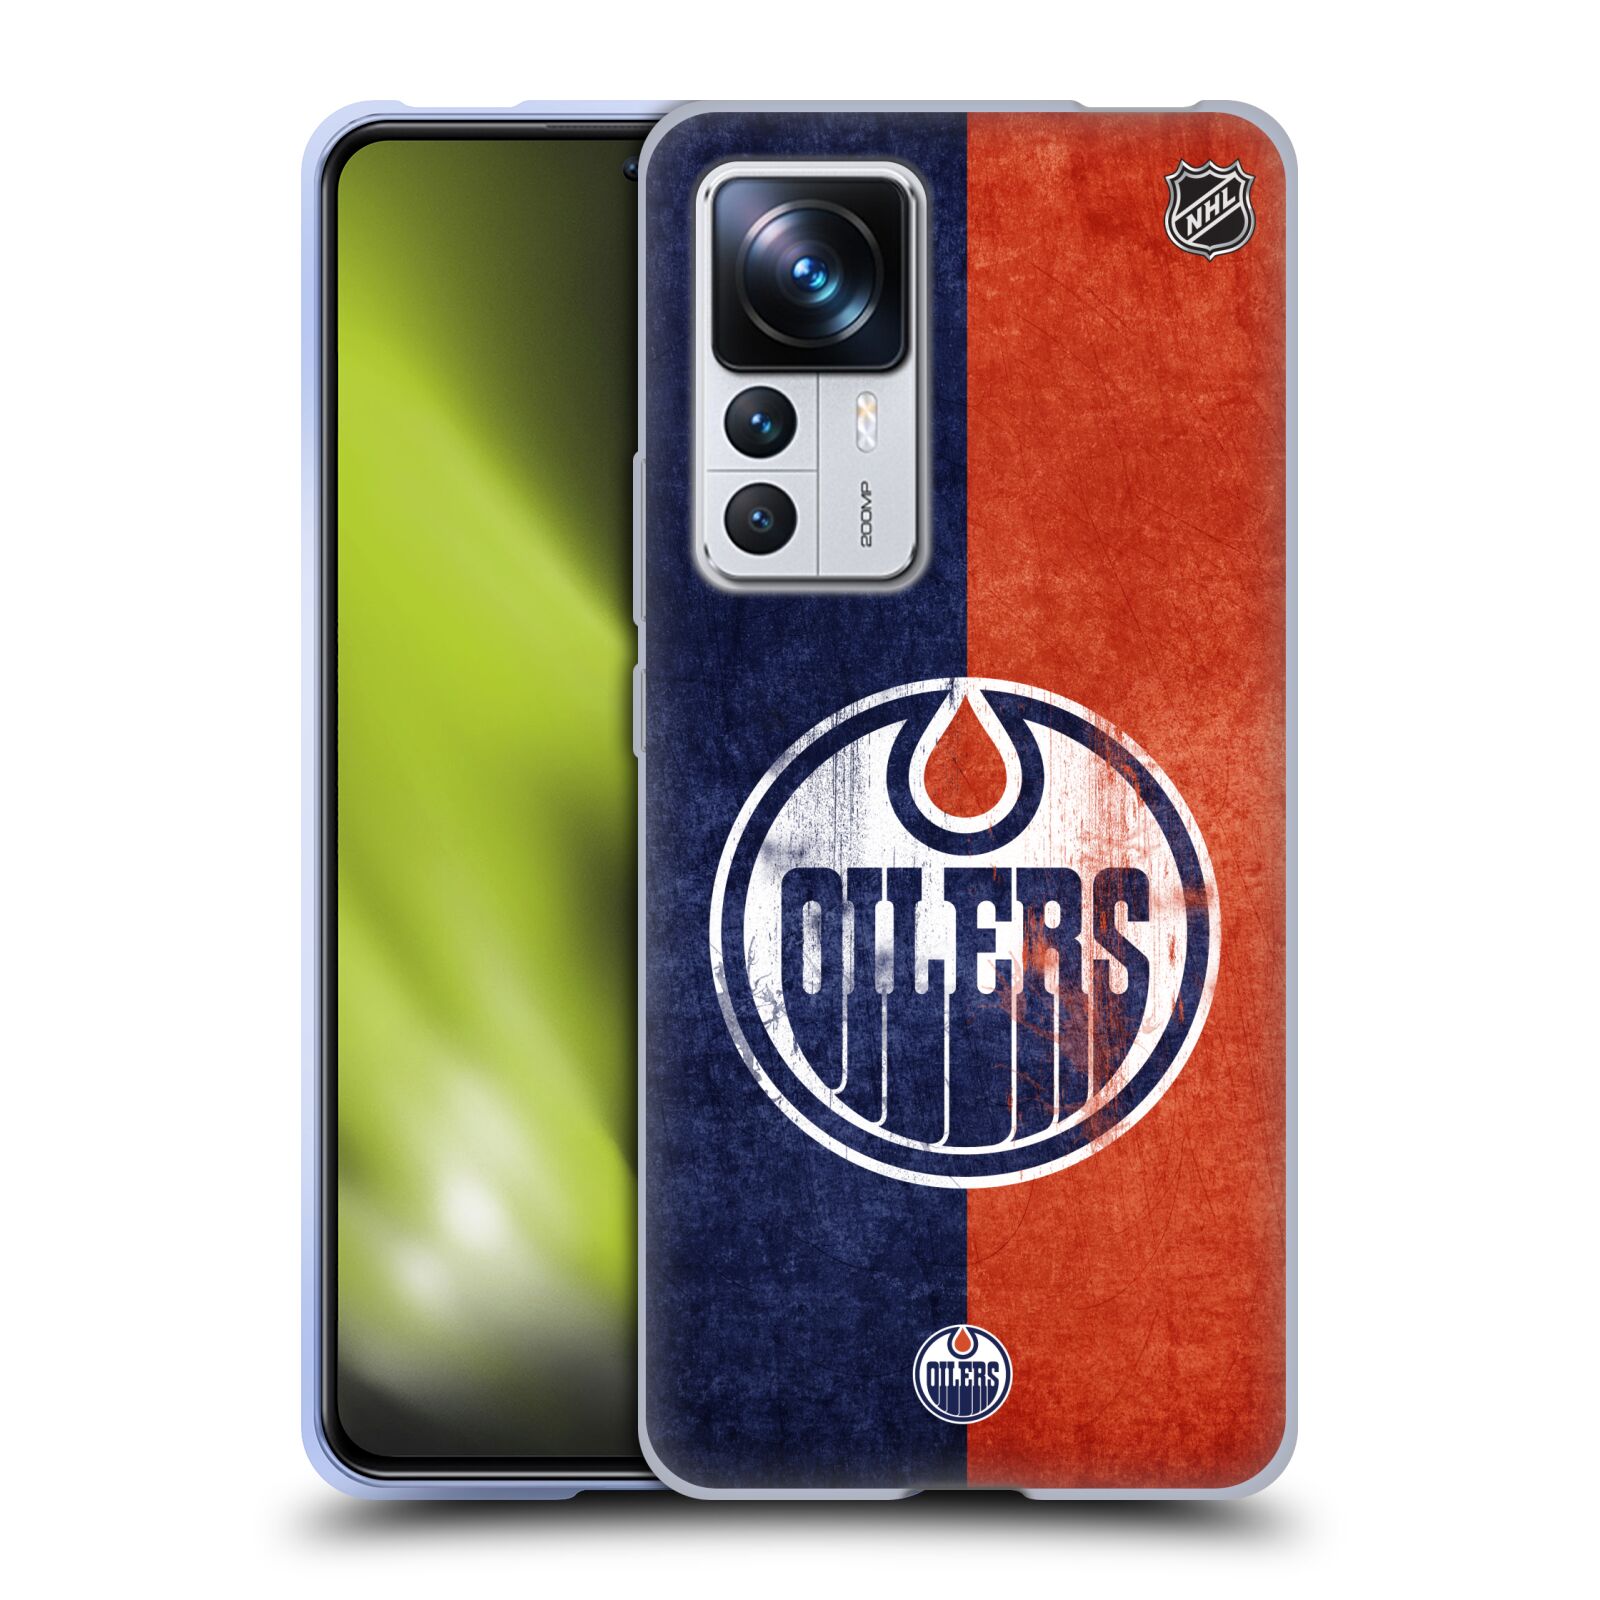 Silikonové pouzdro na mobil Xiaomi 12T / 12T Pro - NHL - Půlené logo Edmonton Oilers (Silikonový kryt, obal, pouzdro na mobilní telefon Xiaomi 12T / 12T Pro s licencovaným motivem NHL - Půlené logo Edmonton Oilers)